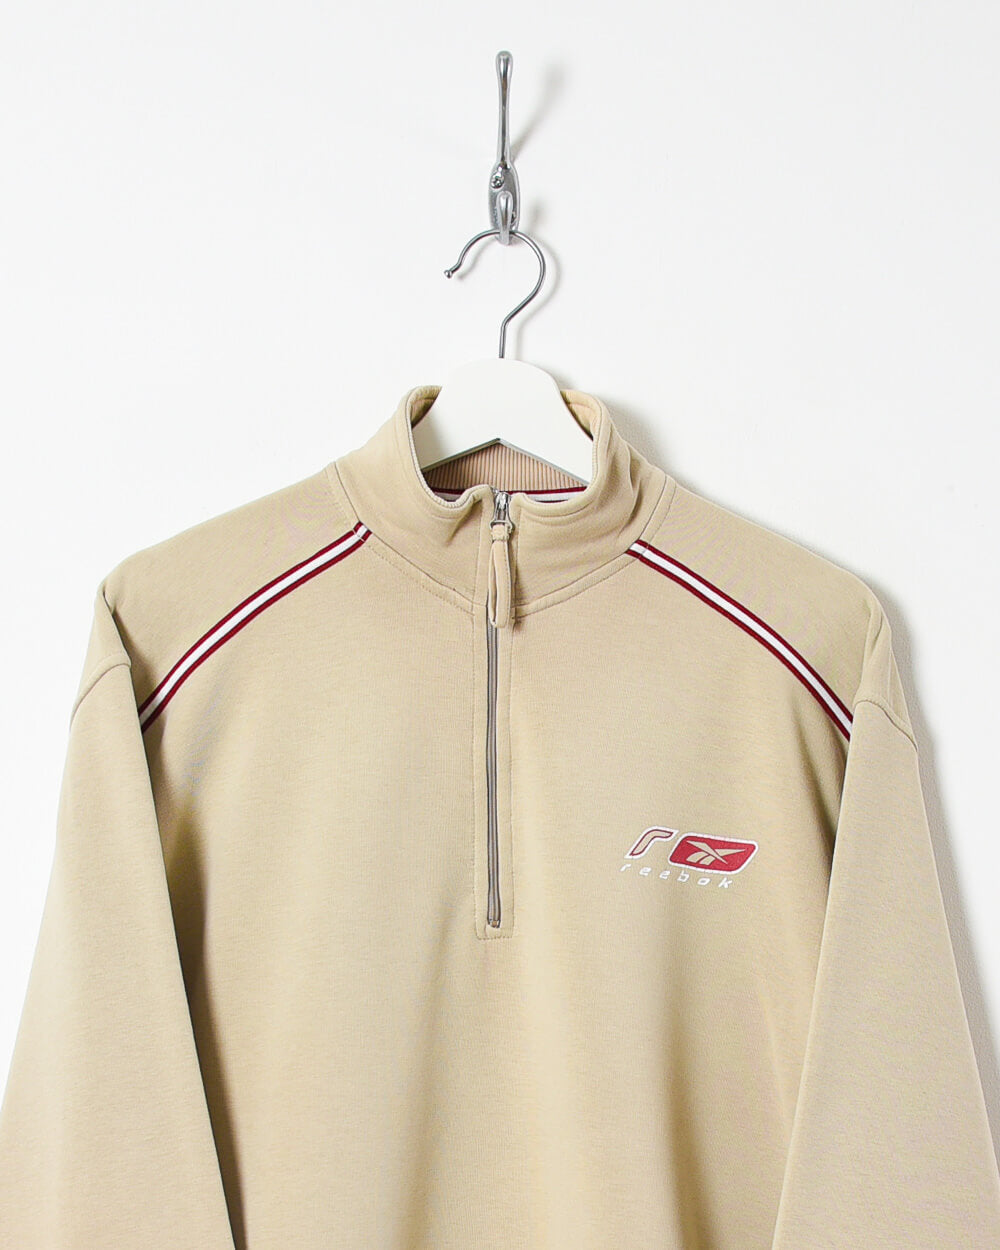 Reebok 1/4 Zip Sweatshirt - X-Large - Domno Vintage 90s, 80s, 00s Retro and Vintage Clothing 